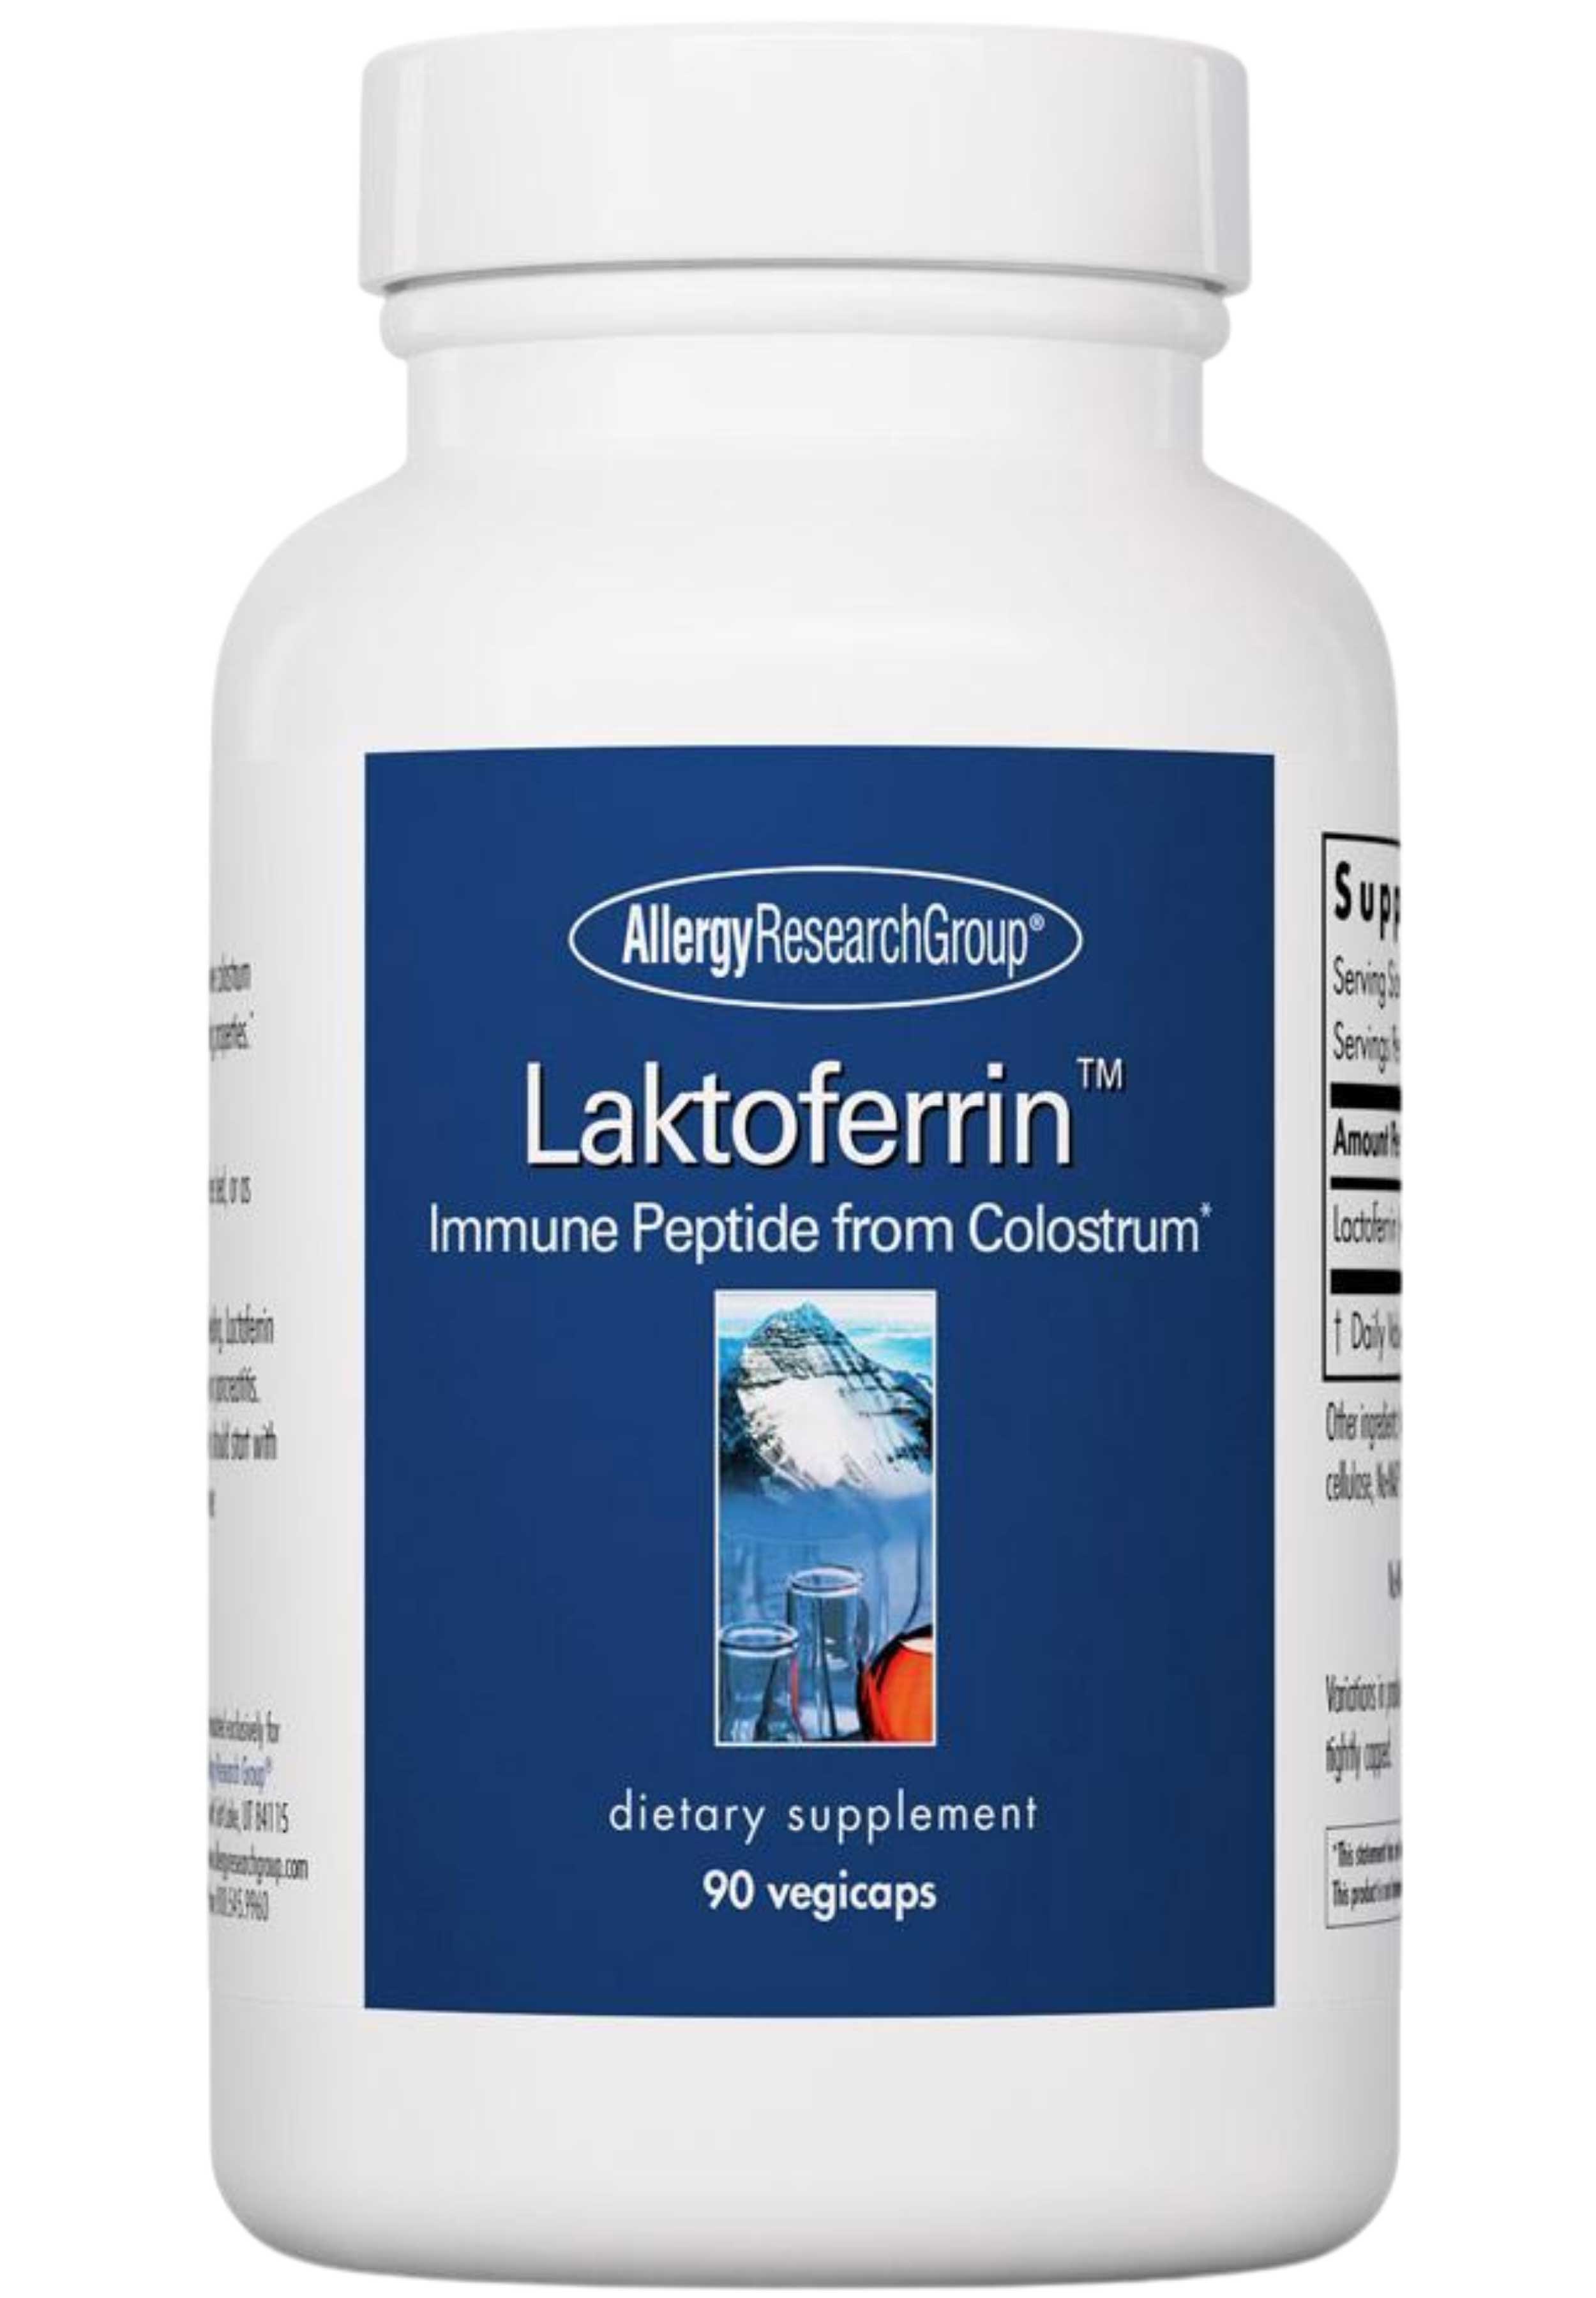 Allergy Research Group Laktoferrin